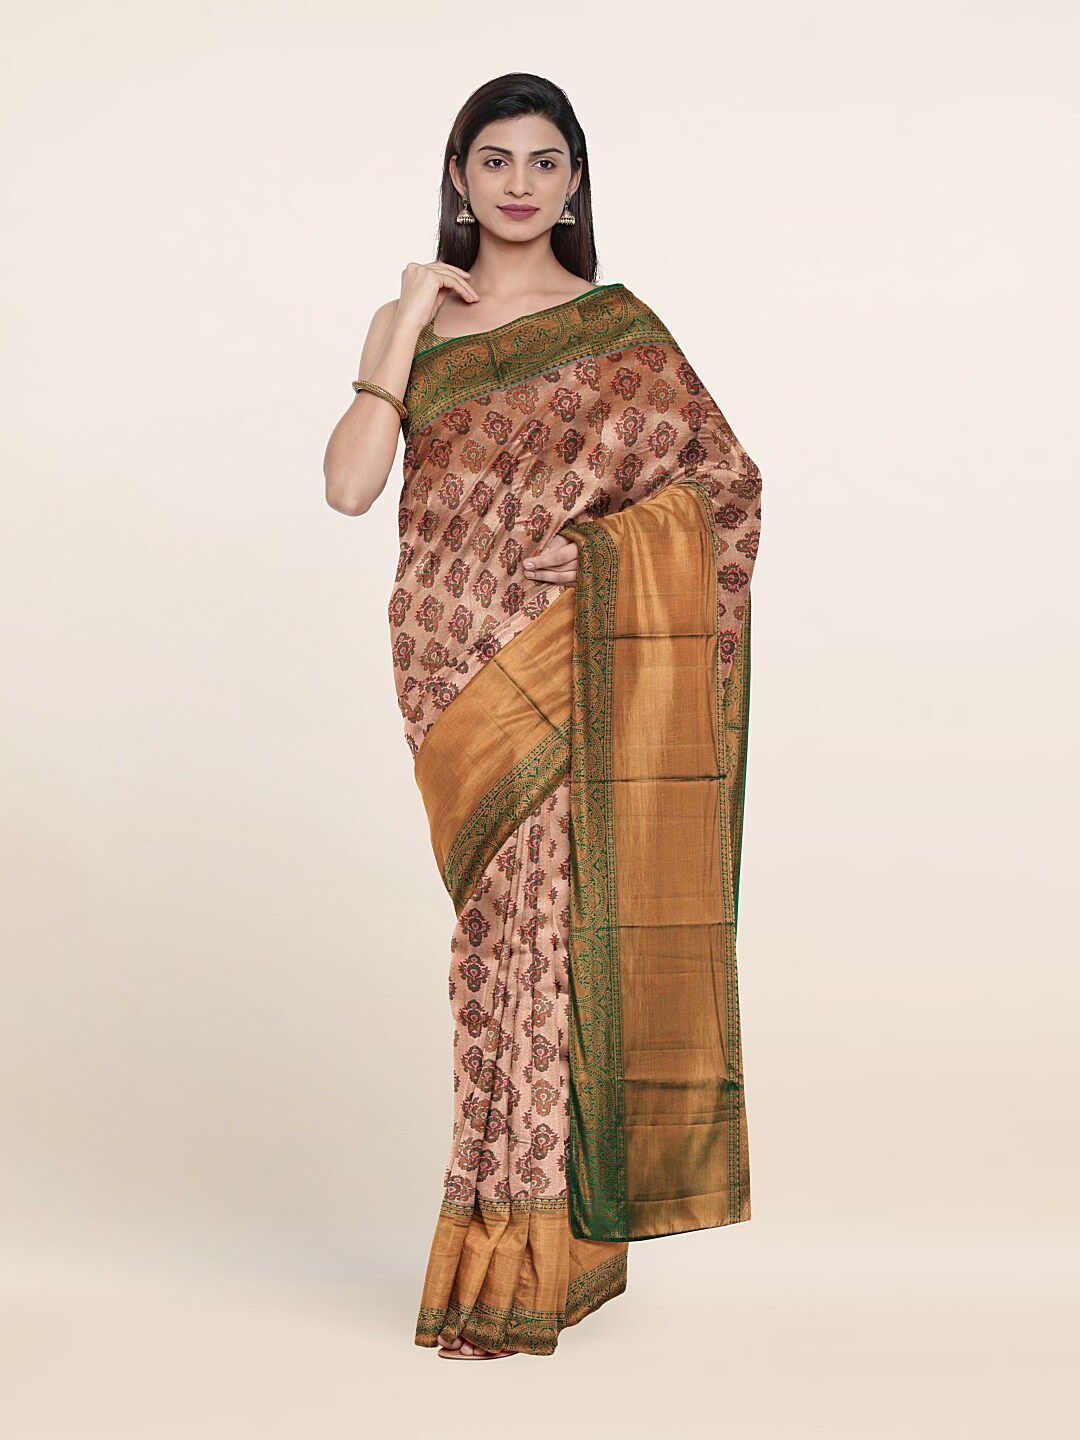 Pothys Peach-Coloured & Gold-Toned Ethnic Motifs Zari Pure Silk Saree Price in India